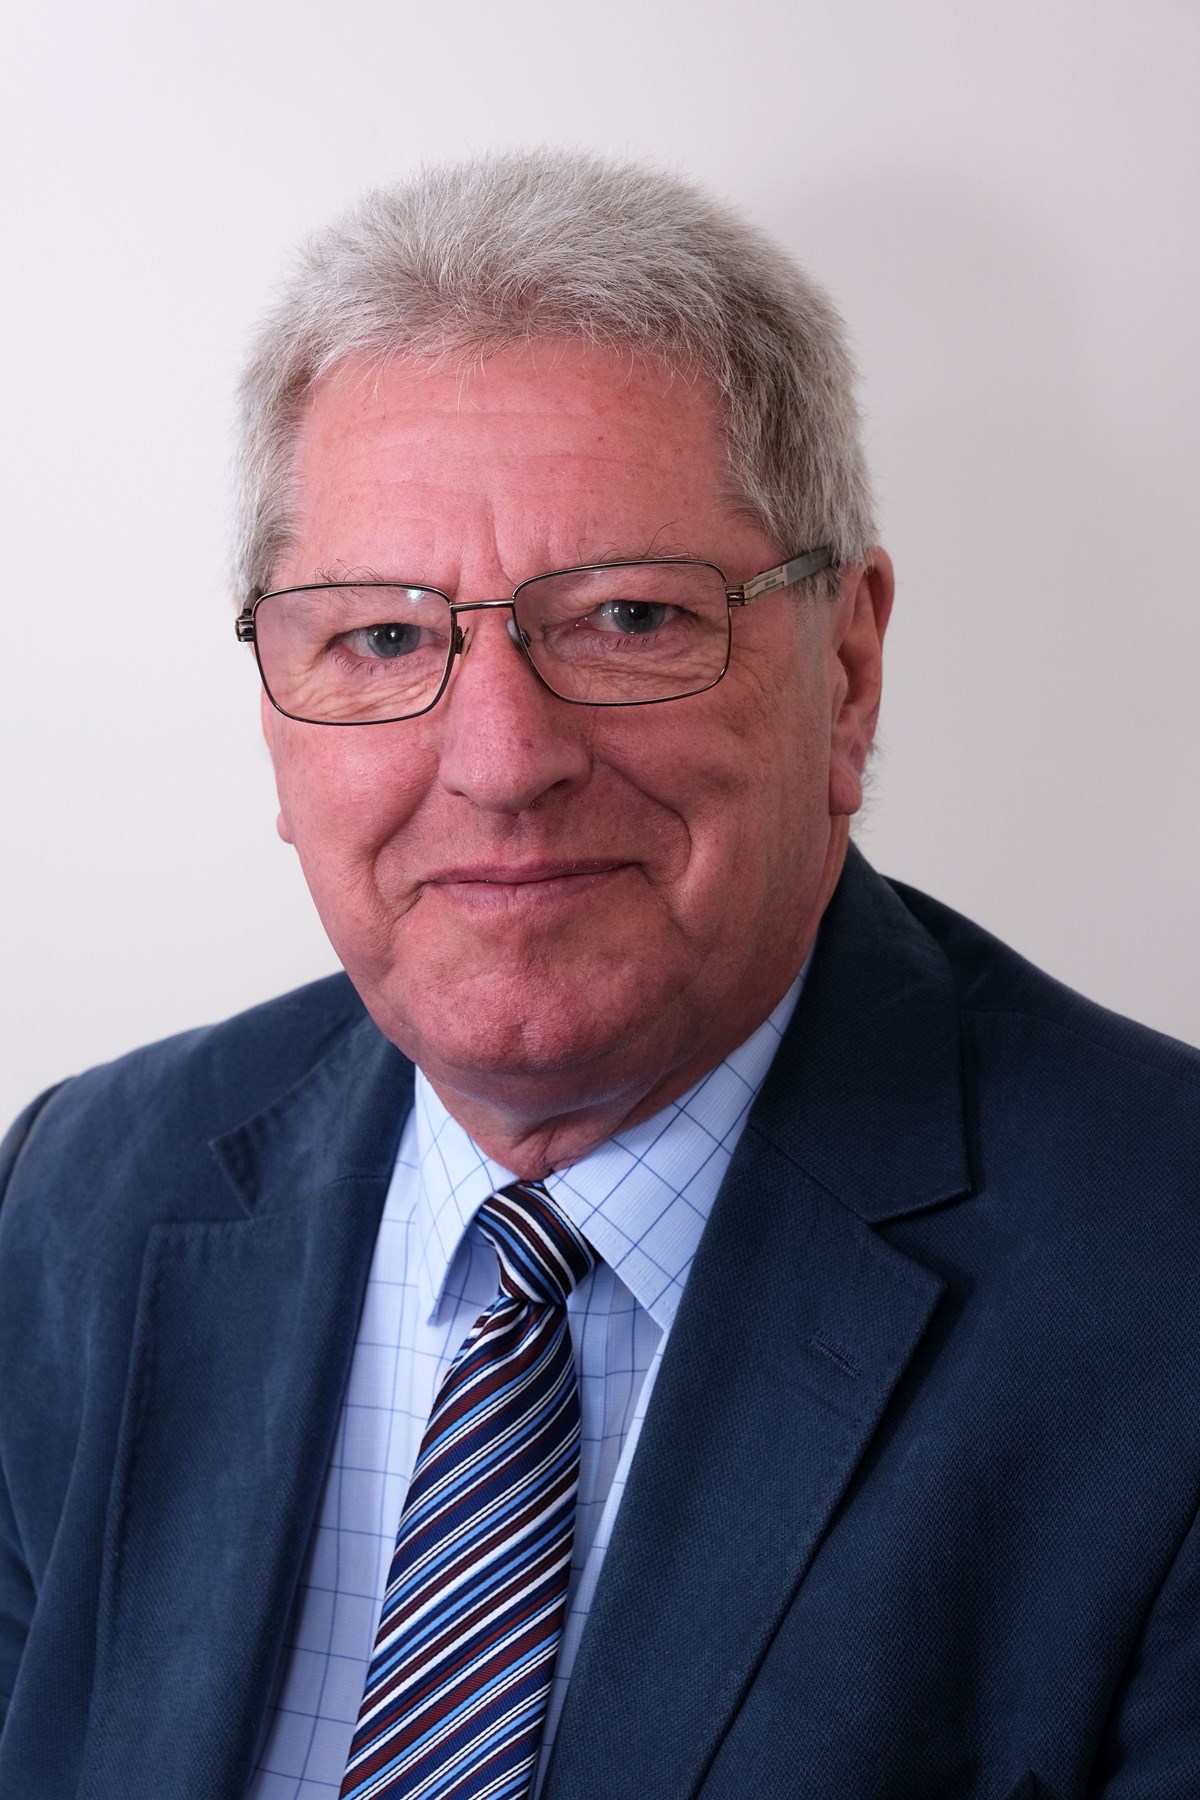 Cllr David Simpson, Leader of Pembrokeshire County Council 